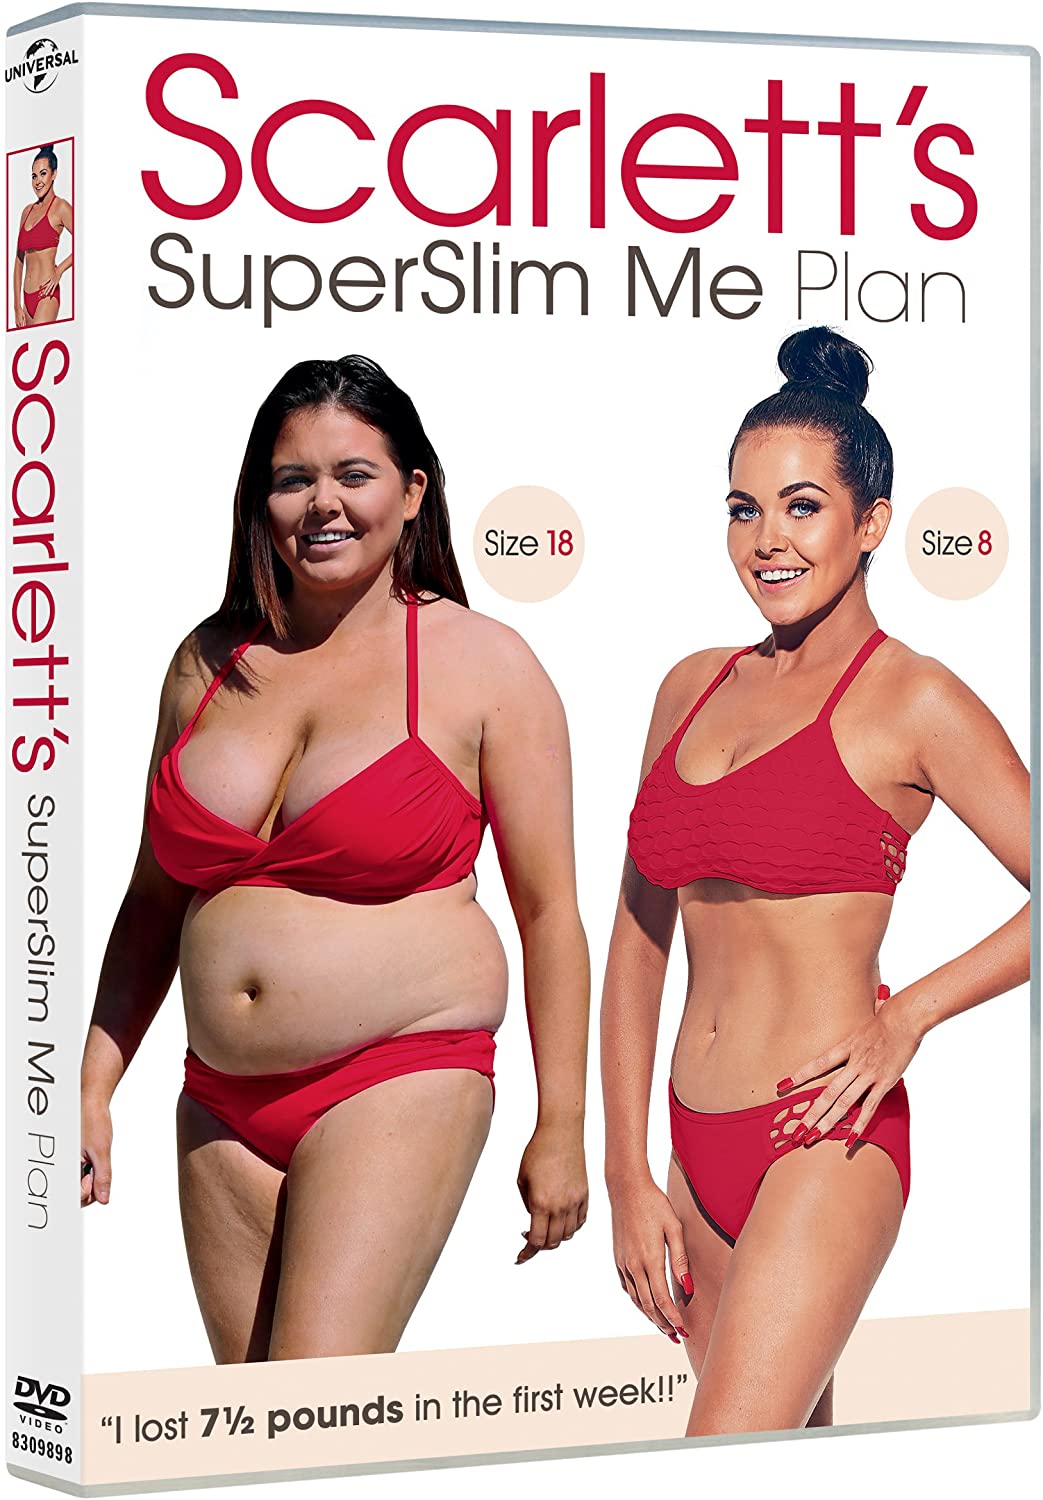 El plan Superslim Me de Scarlett [DVD]